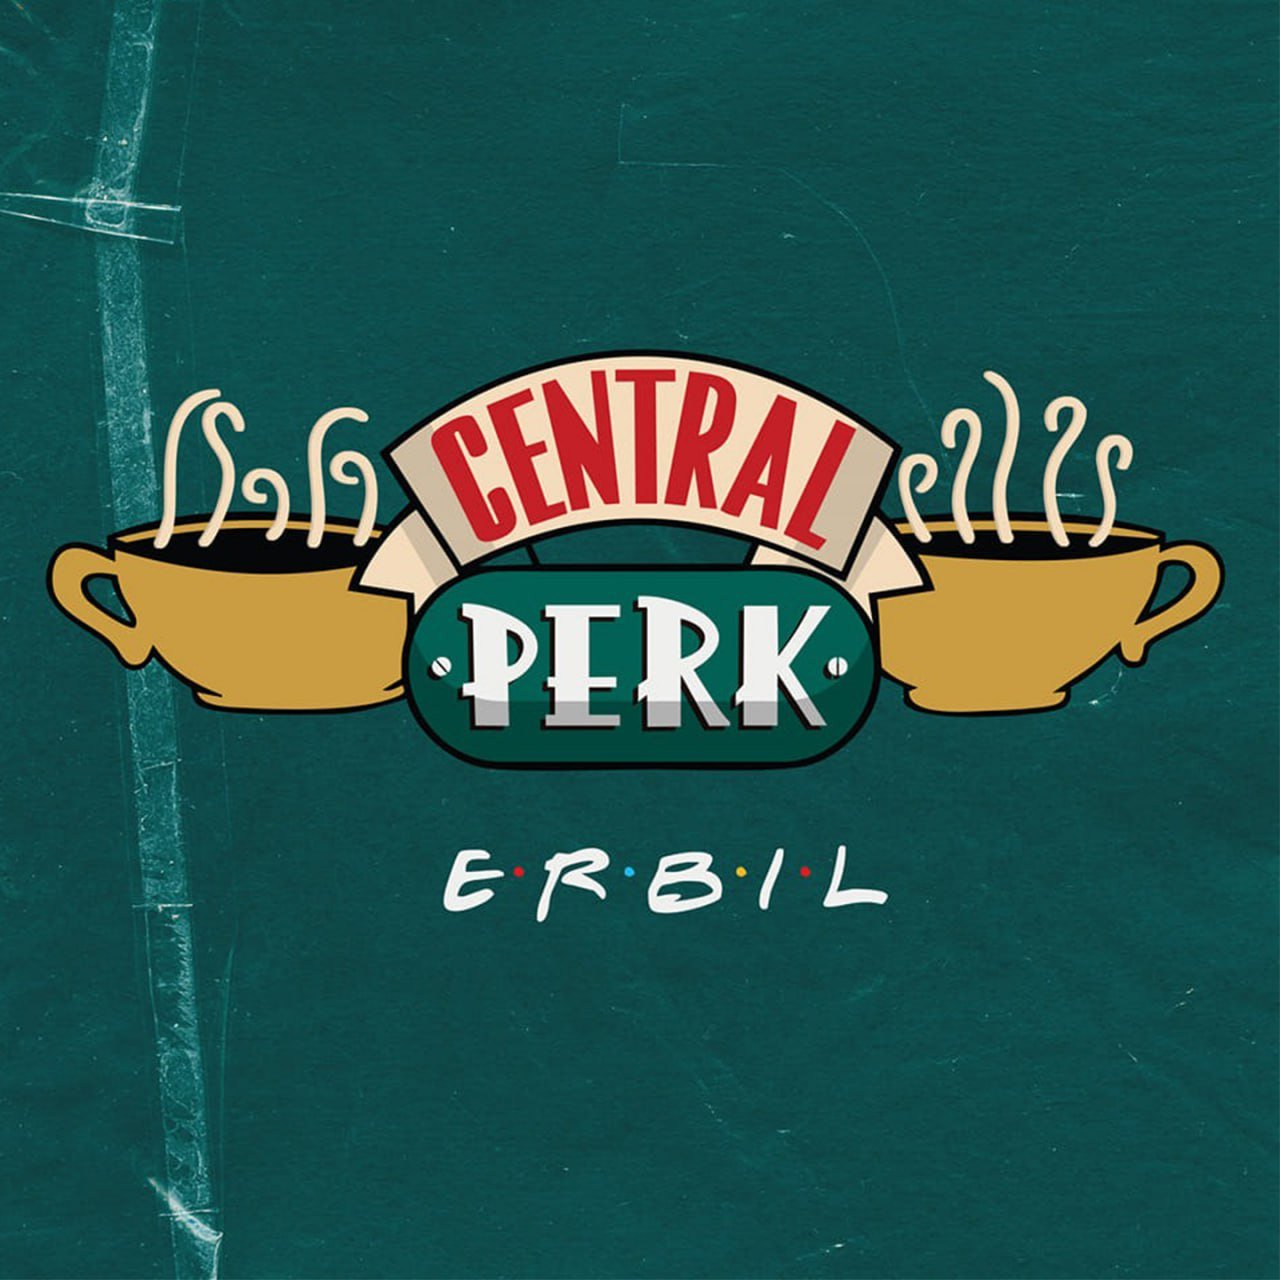 Cenral Perk